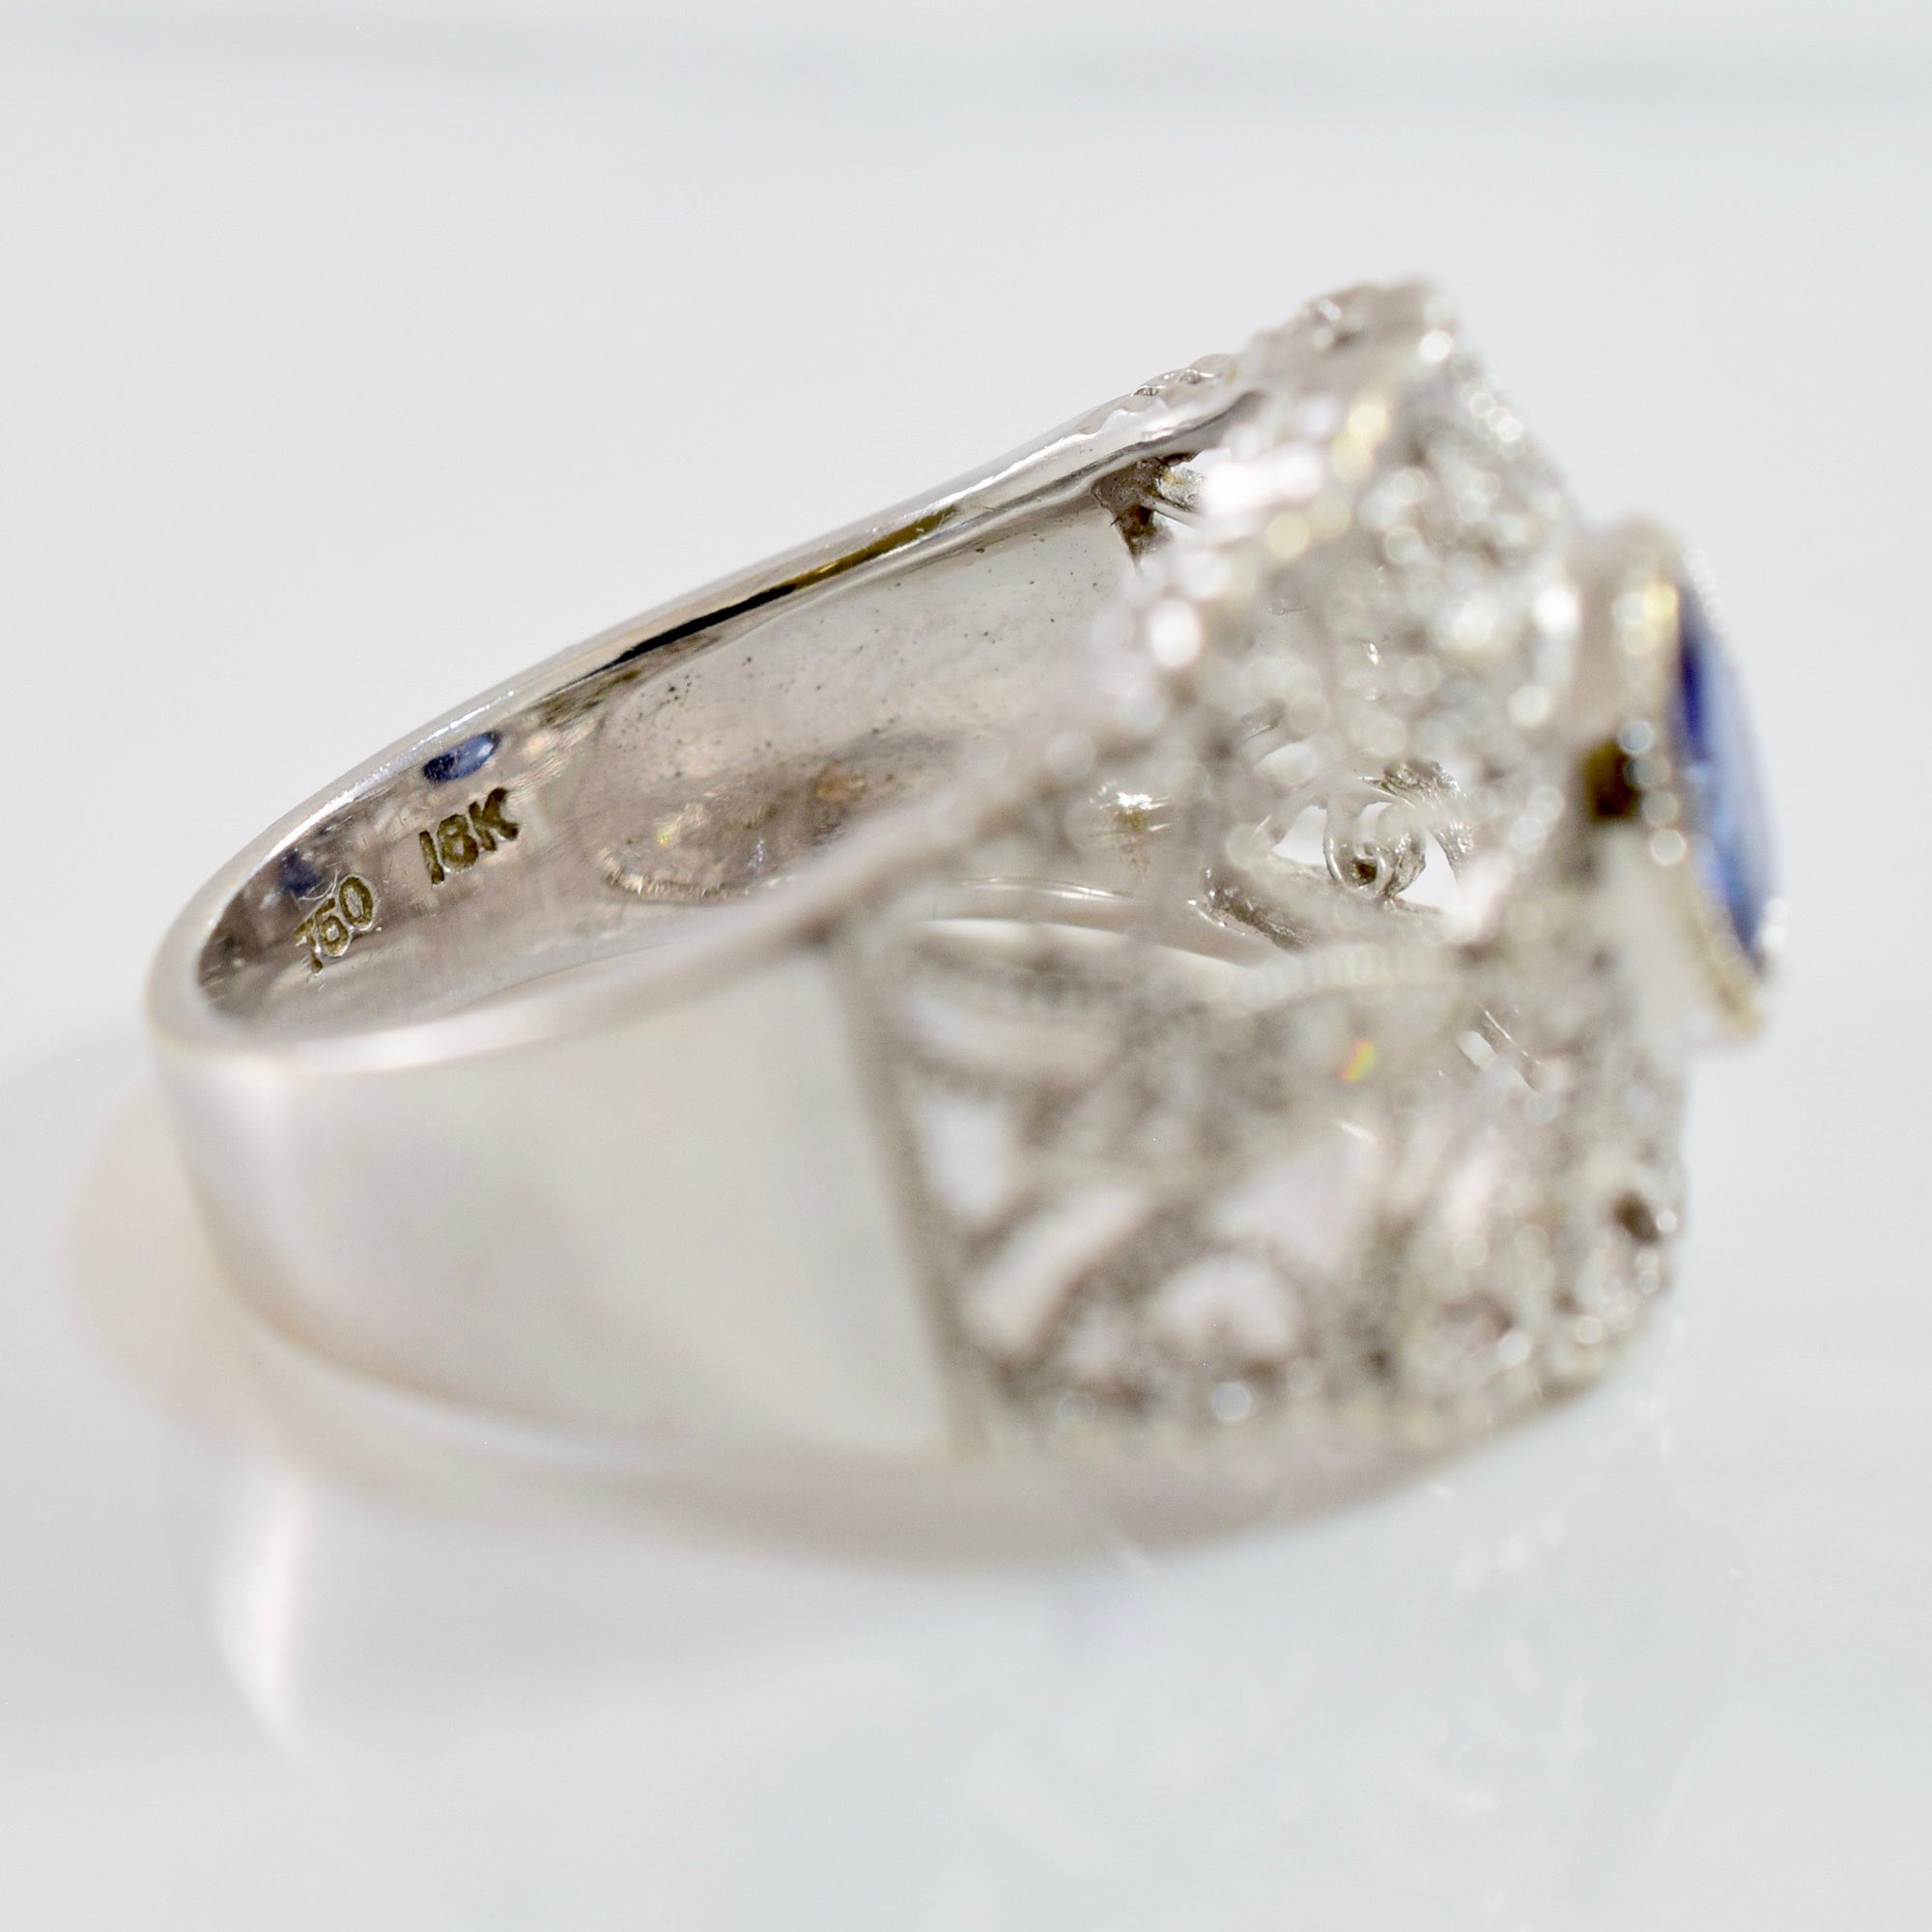 Filigree Diamond and Sapphire Ring | 0.06 ctw SZ 5 |